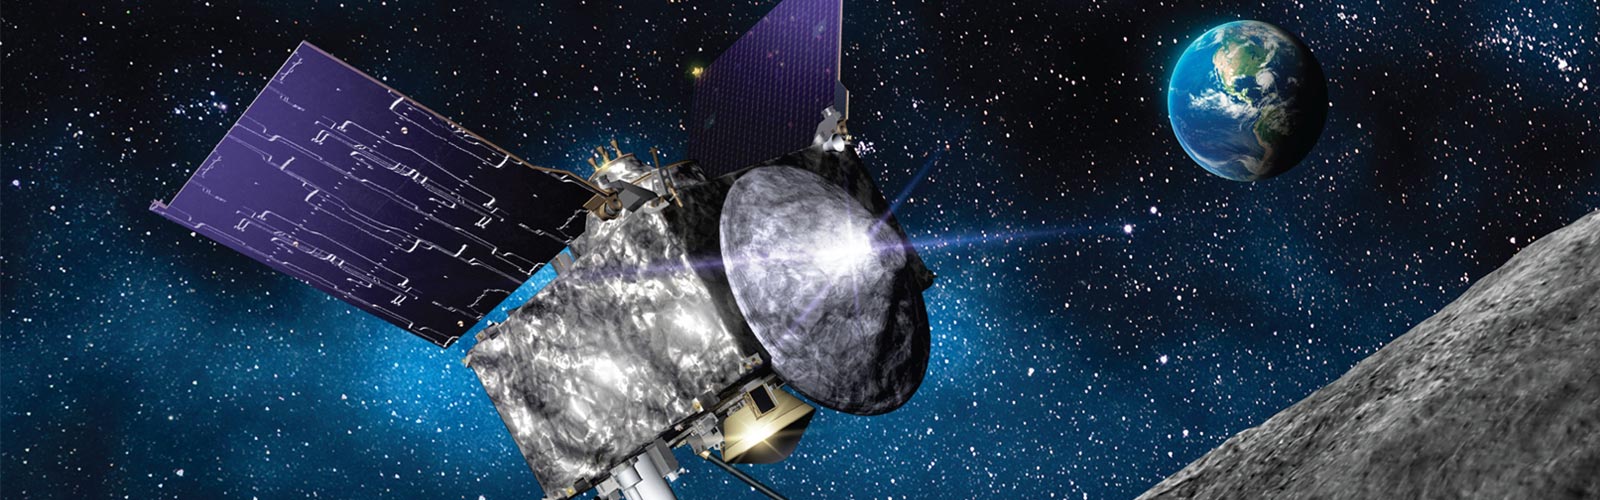 Rosetta, ExoMars & OSIRIS-REx: present and future robotic exploration of the Solar System